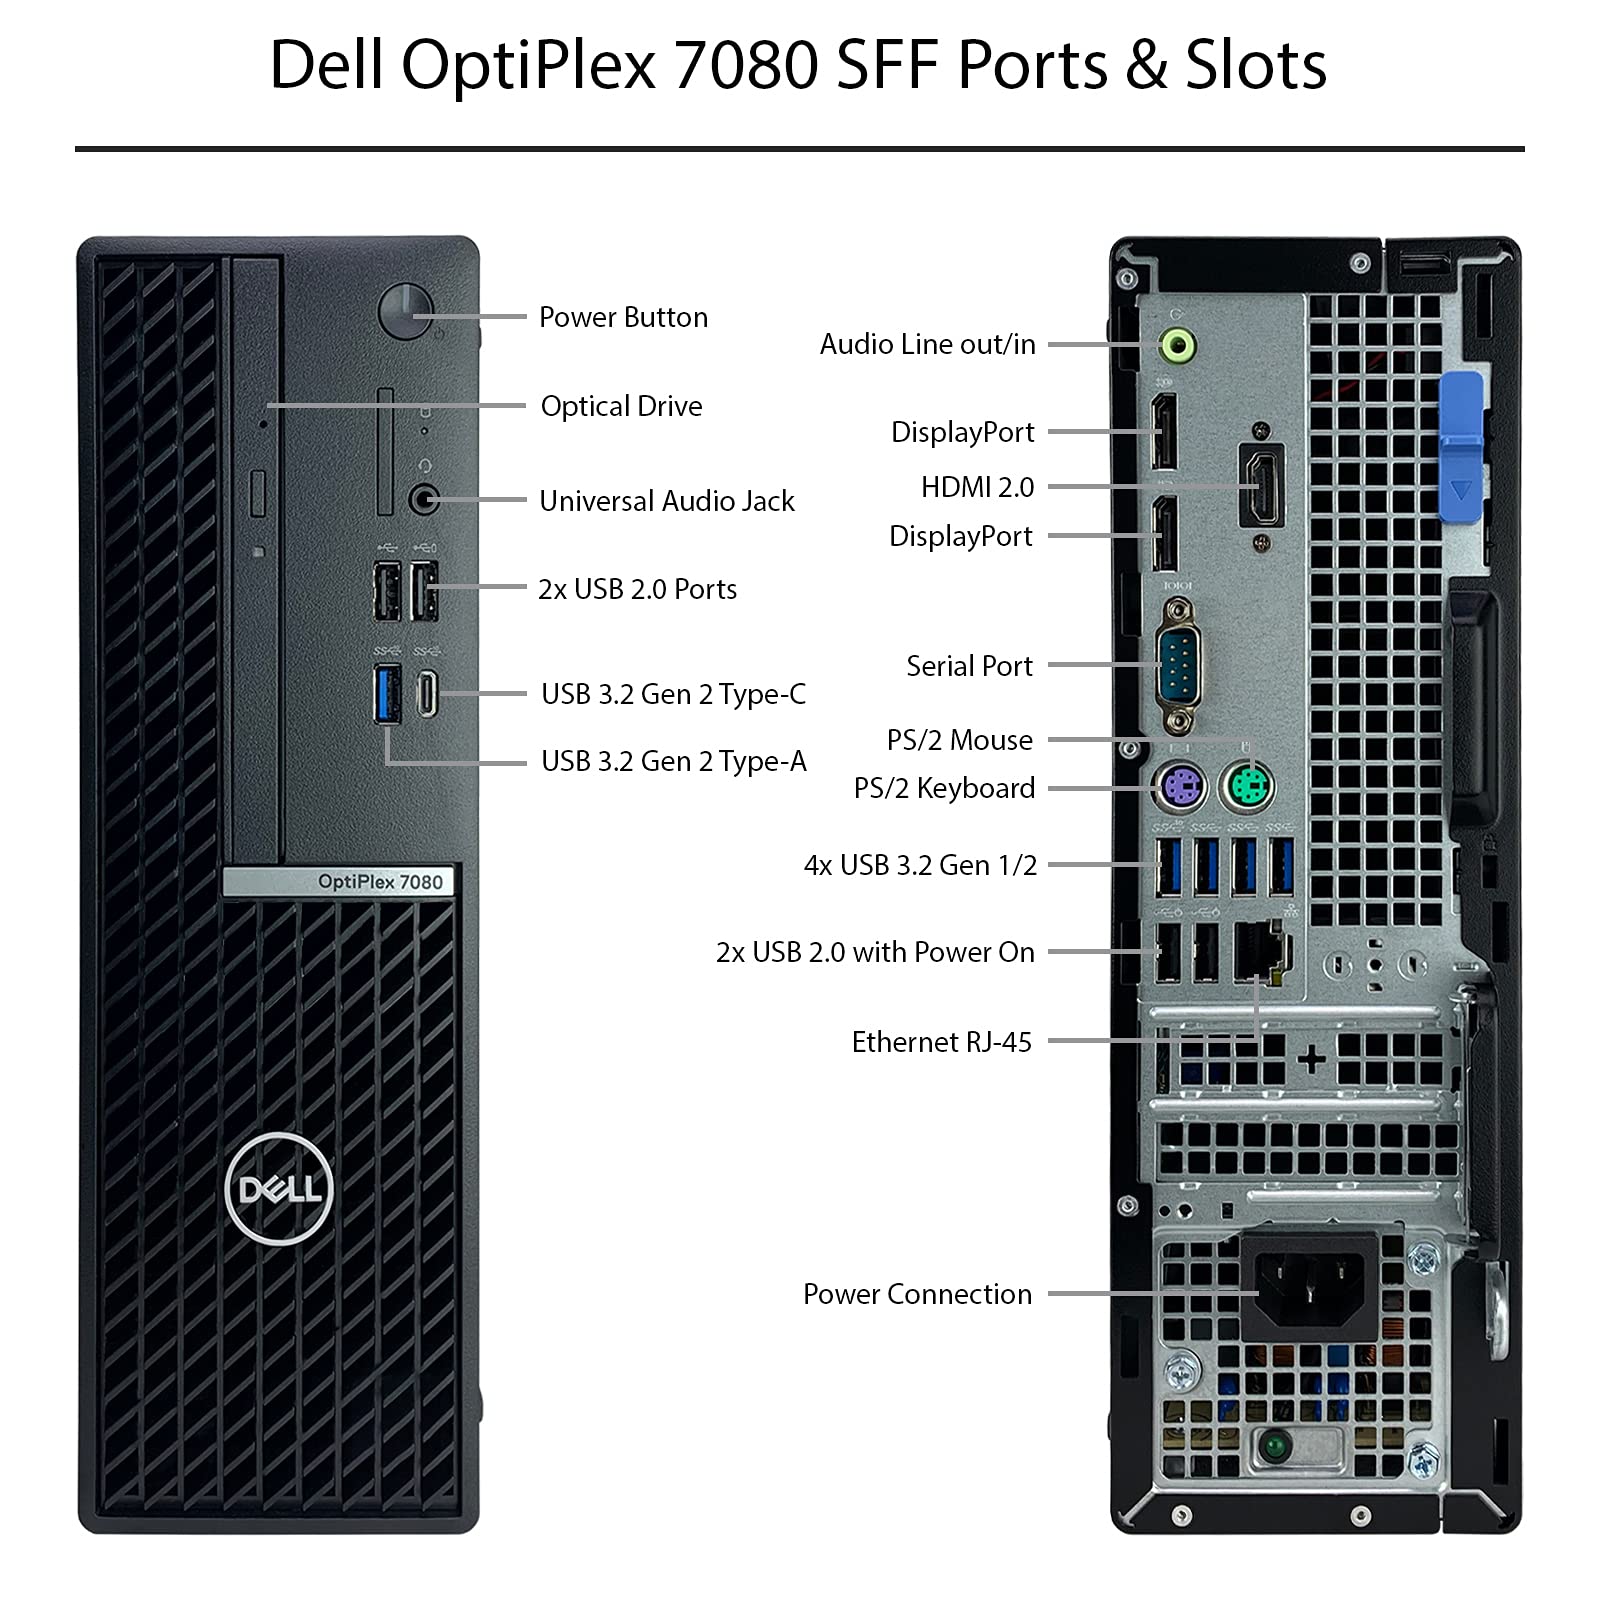 Dell OptiPlex 7080 SFF Small Form Factor Desktop Computer - 10th Gen Intel Core i7-10700 8-Core up to 4.80 GHz CPU, 16GB RAM, 1TB Solid State Drive, Intel UHD Graphics 630, Windows 10 Pro (Renewed)